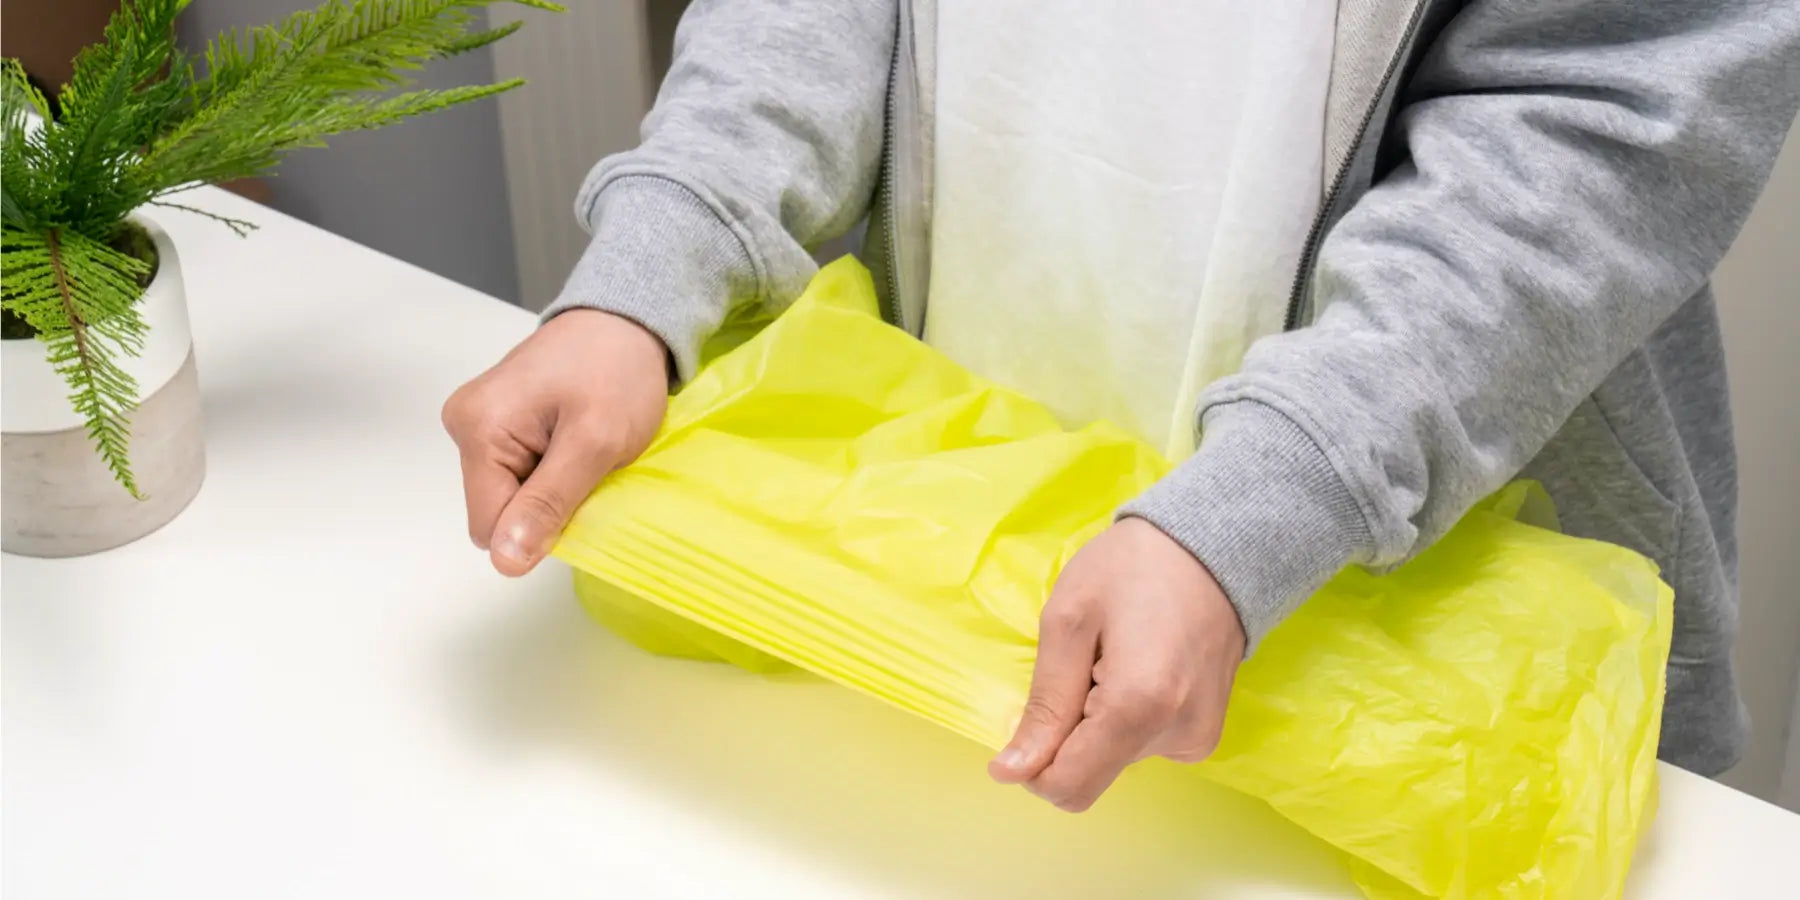 100% Biodegradable Cornstarch Trash Bags 6-Roll